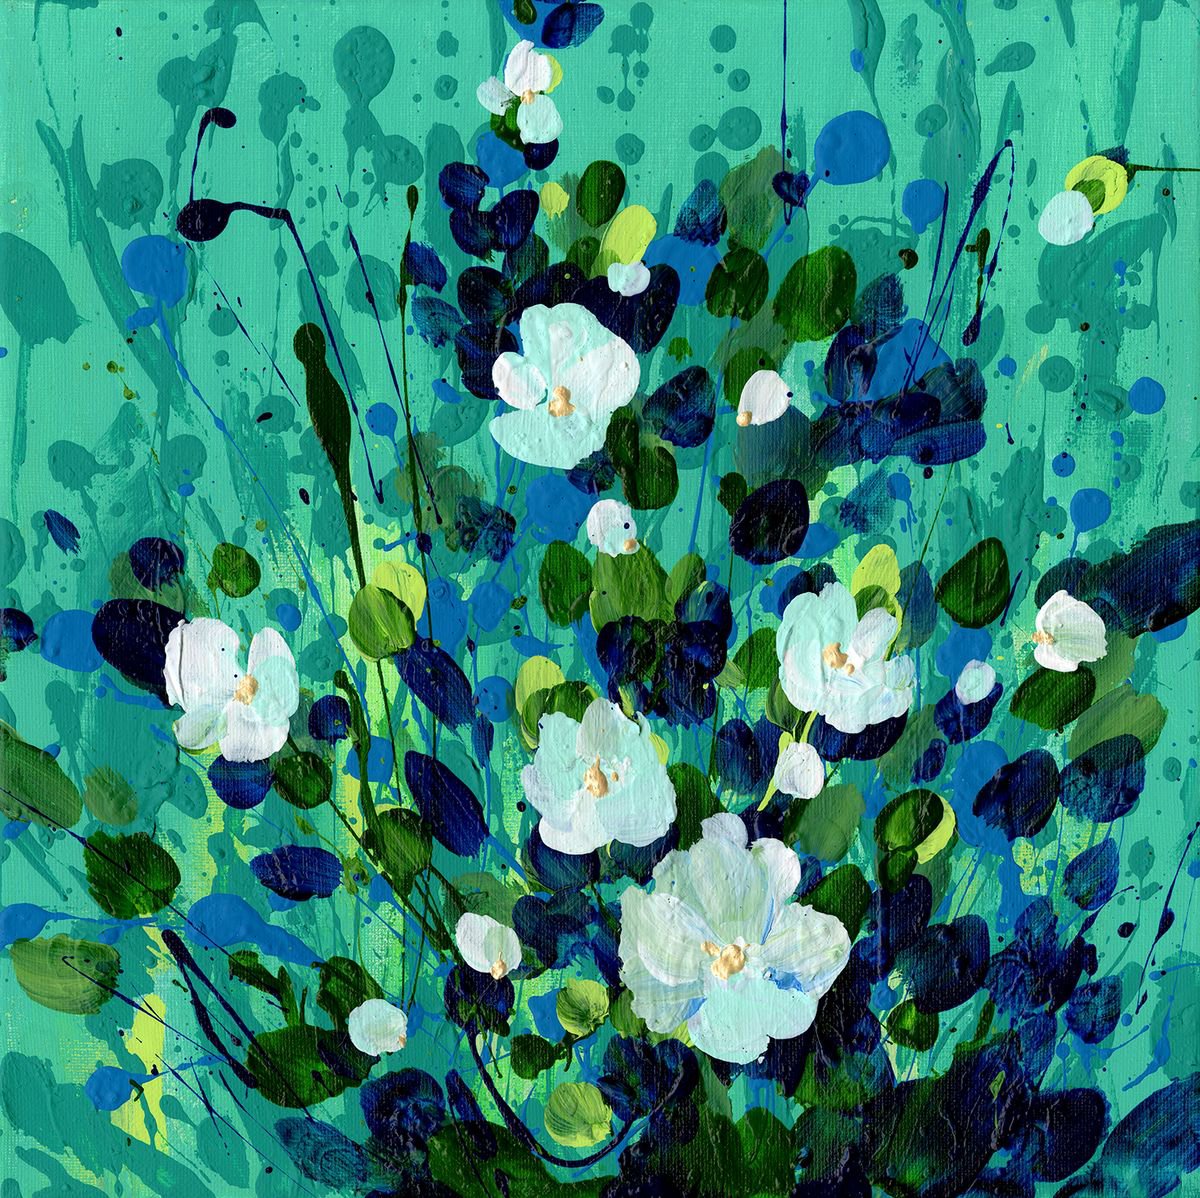 Sweet Wonder 3 -  Textured Flower Painting  by Kathy Morton Stanion by Kathy Morton Stanion